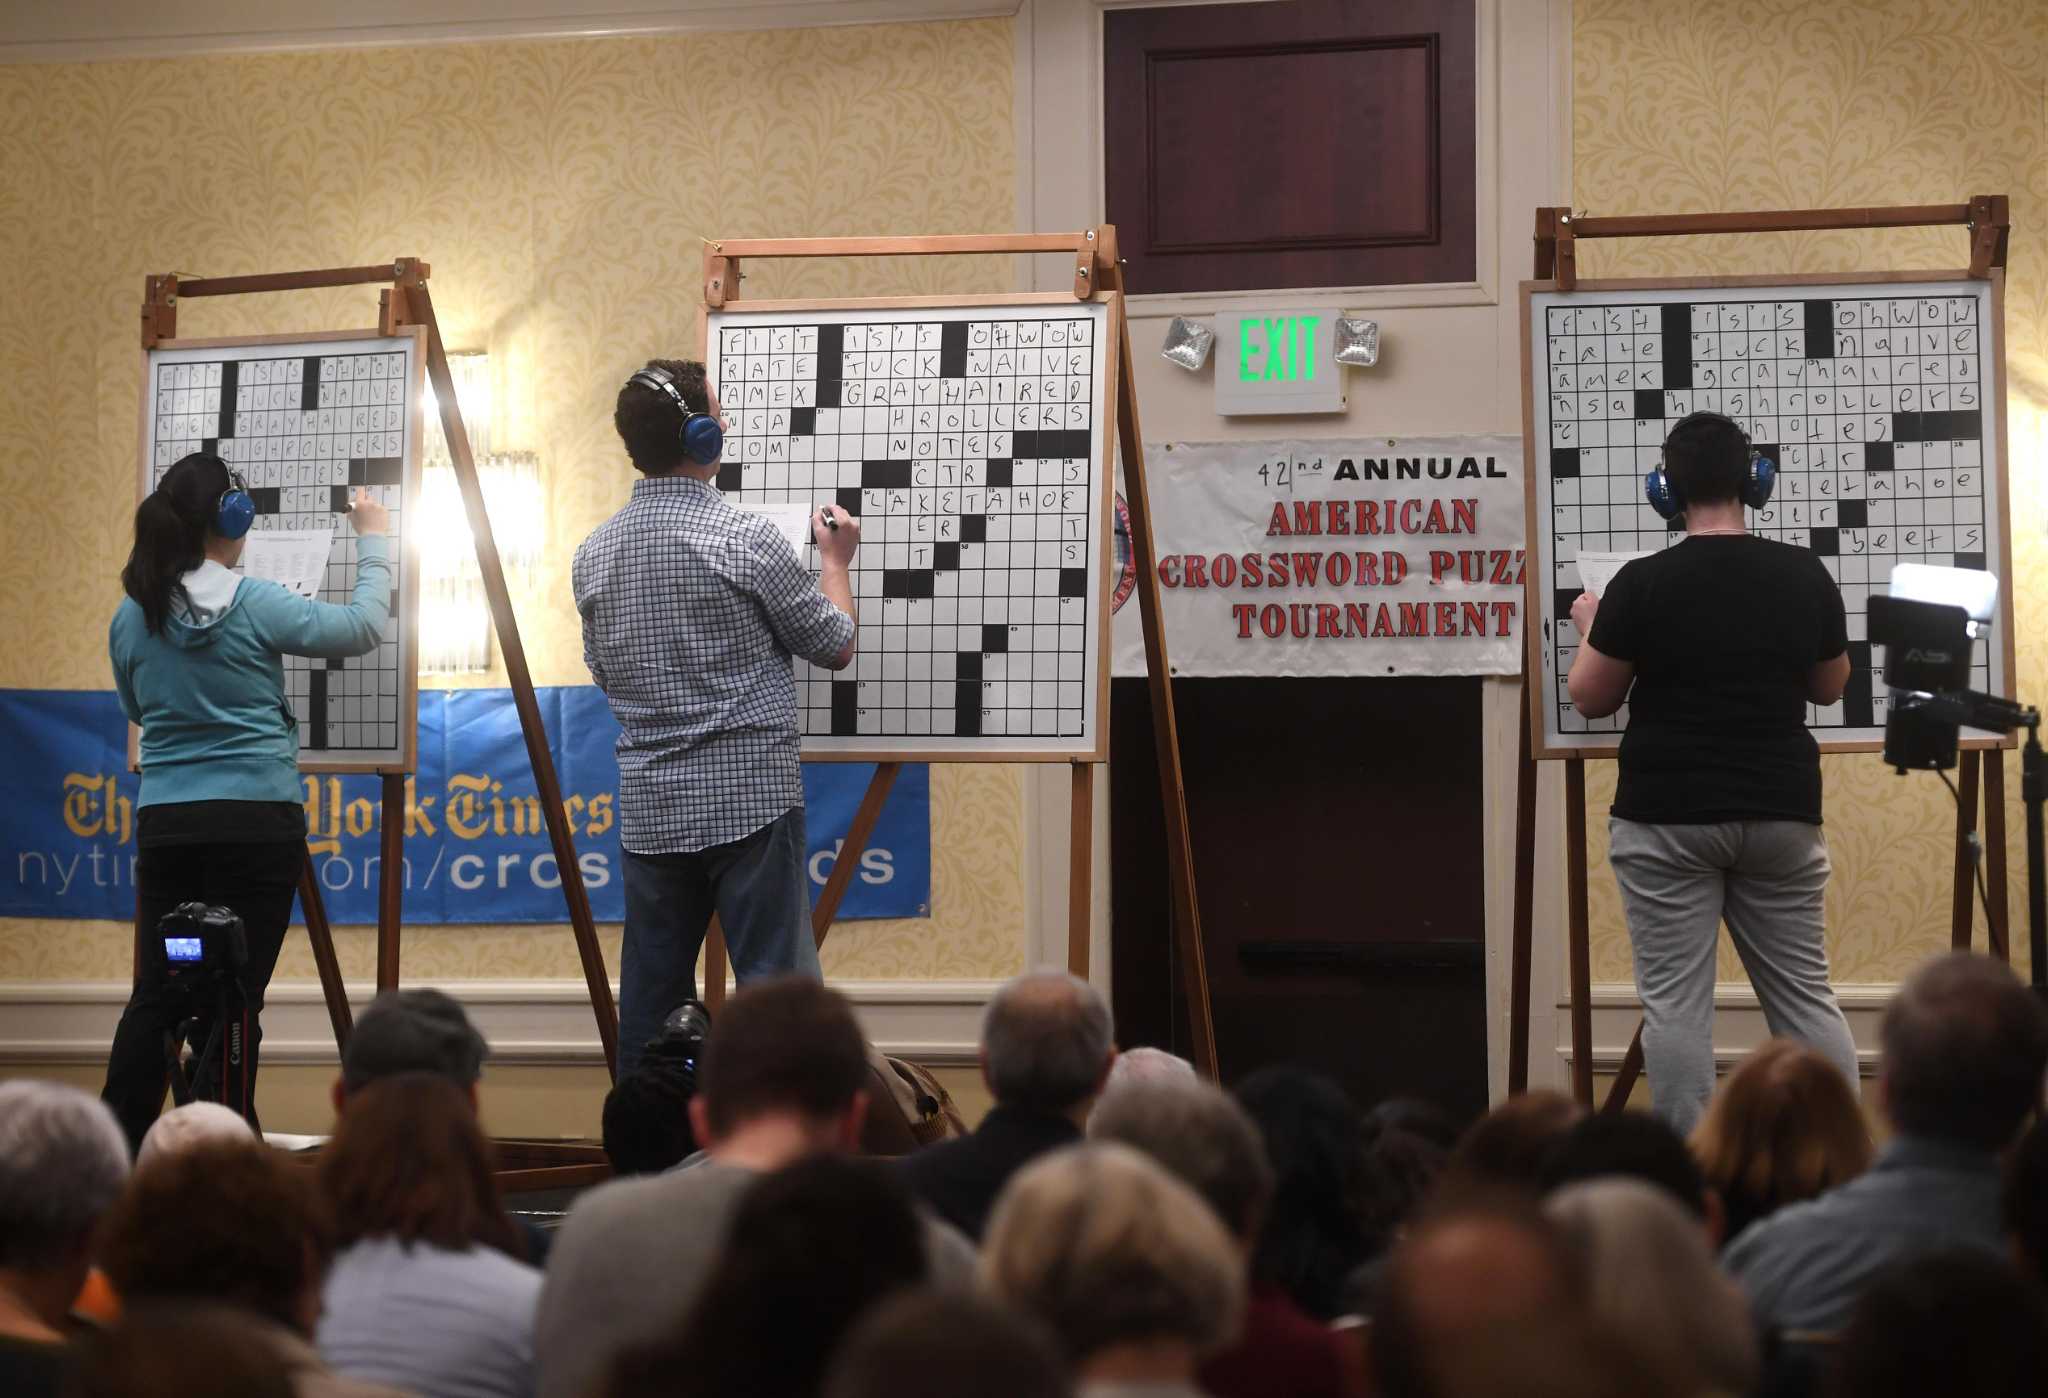 Will Shortz’s American Crossword Puzzle Tournament returns to Stamford